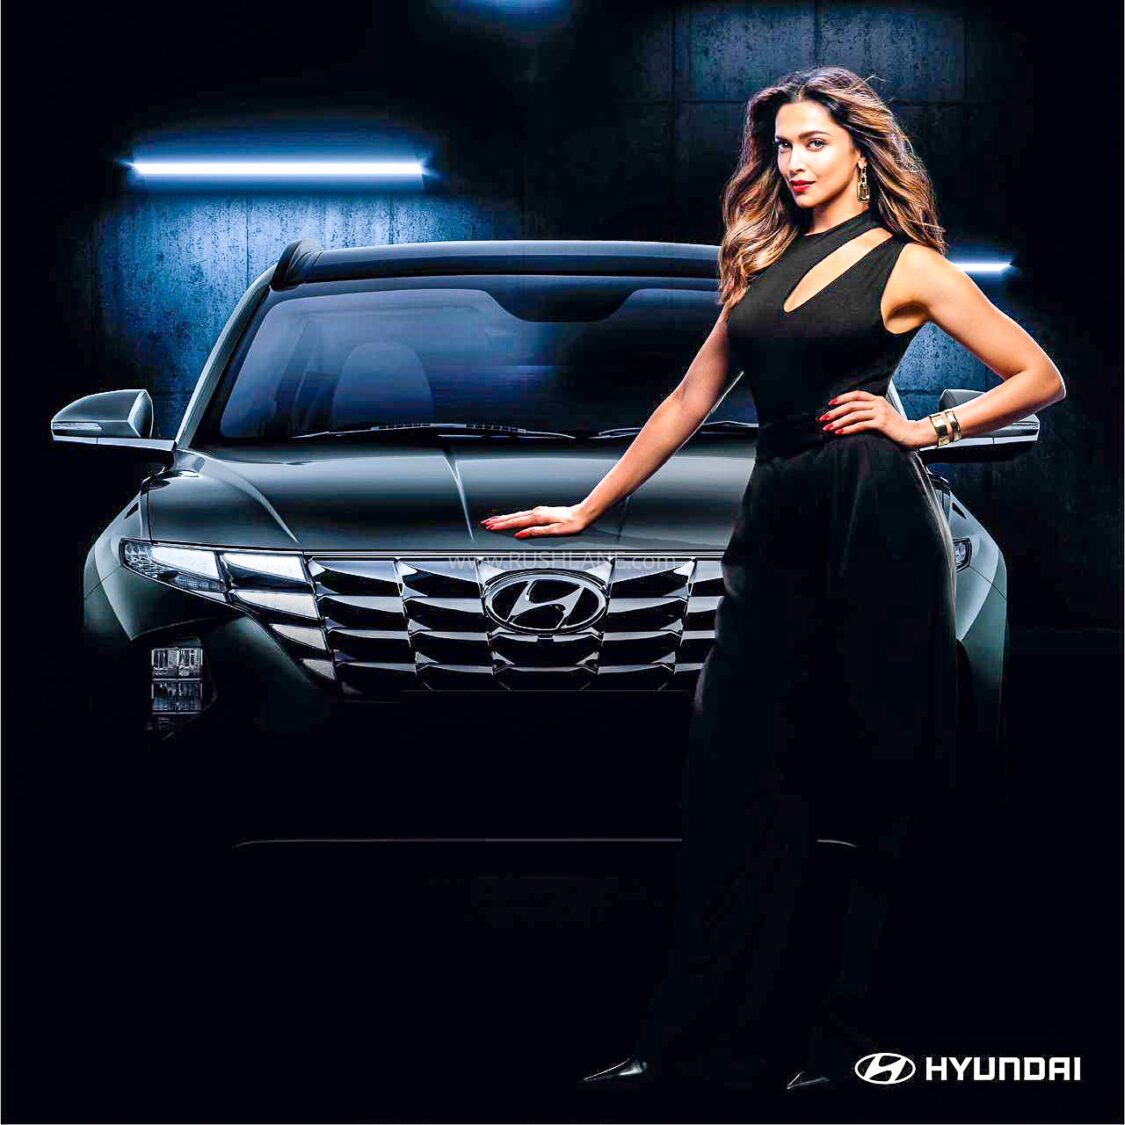 Deepika Padukone joins Hyundai India as brand ambassador